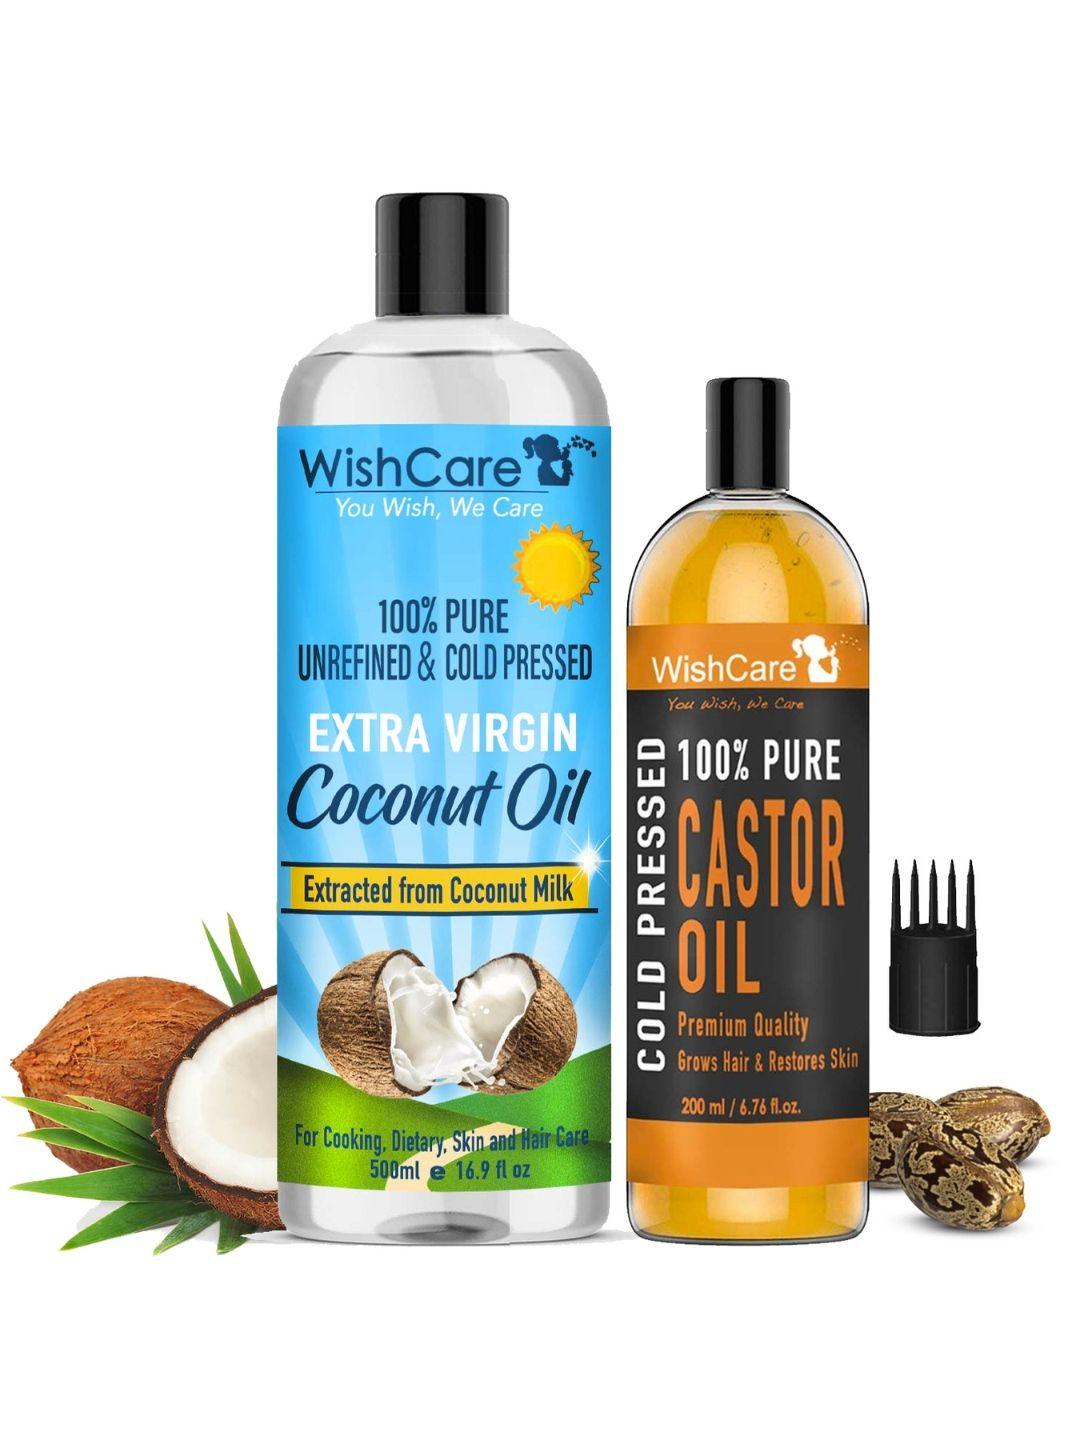 wishcare set of cold pressed extra-virgin coconut oil & castor oil